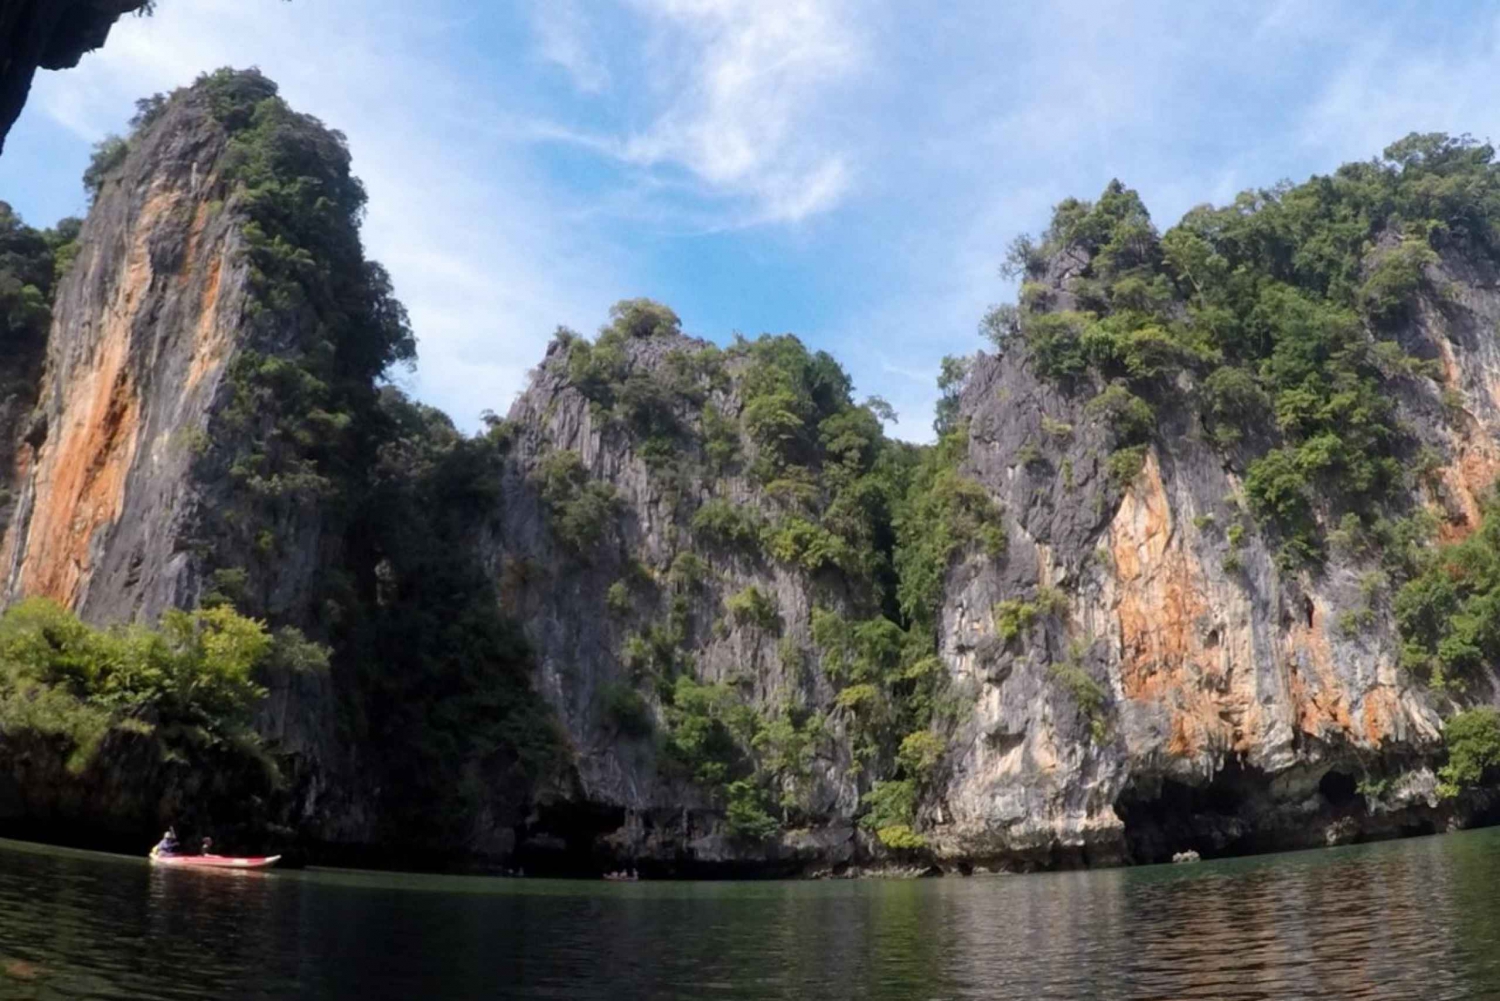 Phuket: James Bond Island Day Trip by Speedboat and Canoe